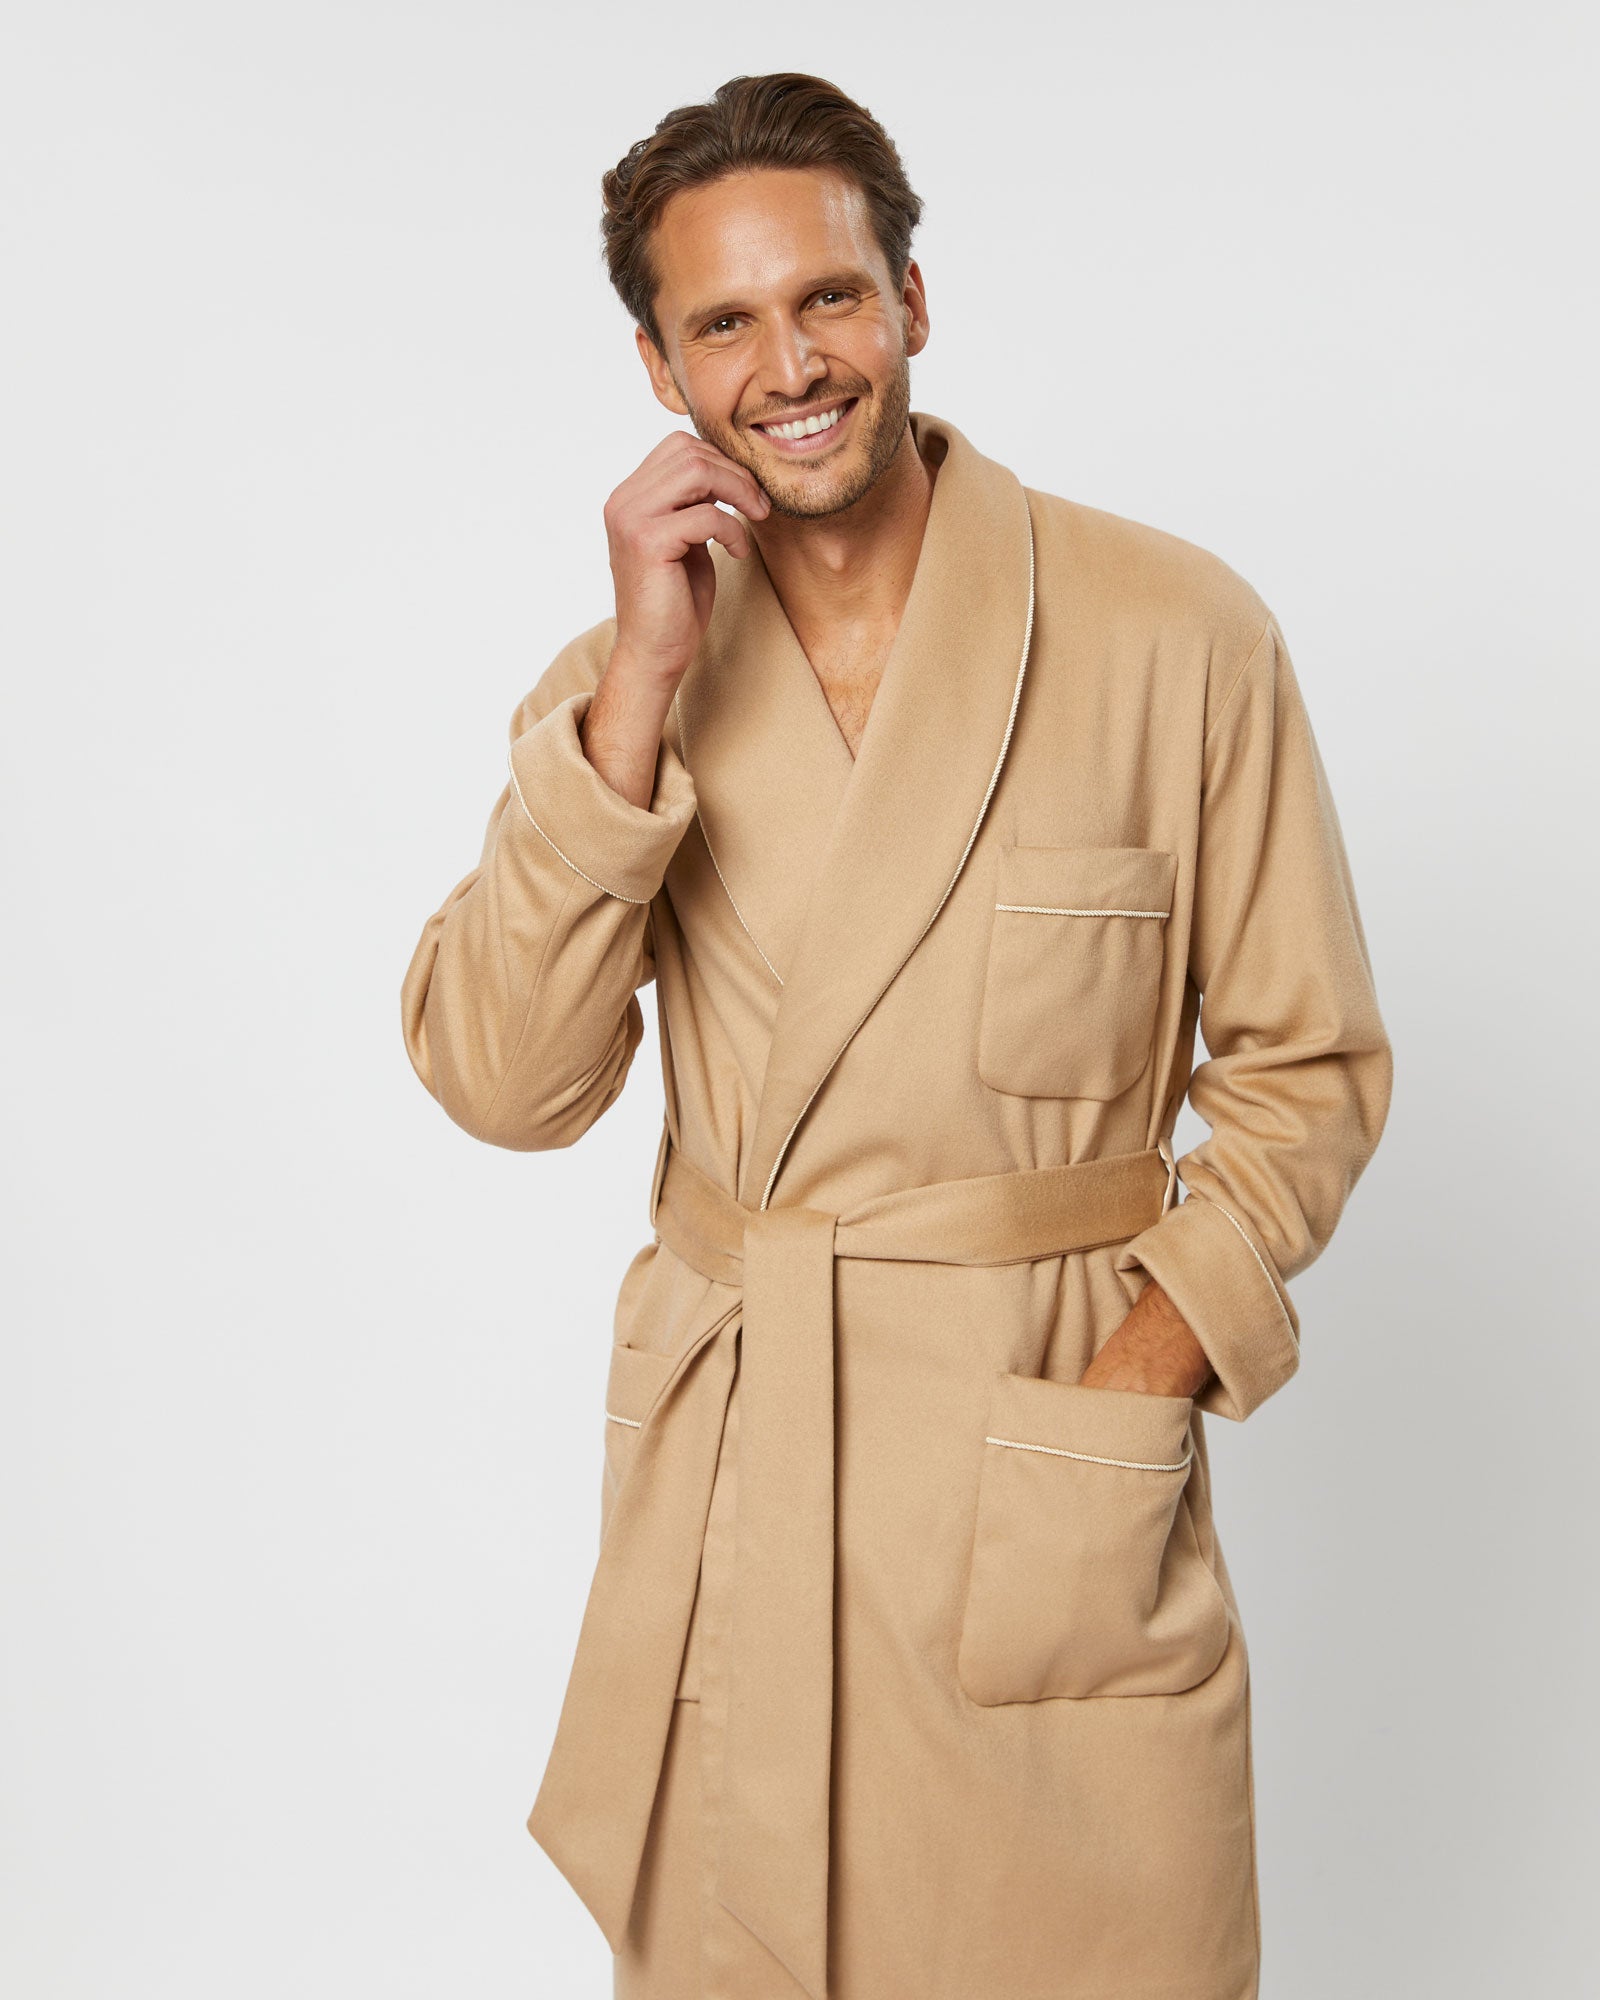 ZEGNA X THE ELDER STATESMAN Shawl-Collar Checked Cashmere Robe for Men | MR  PORTER